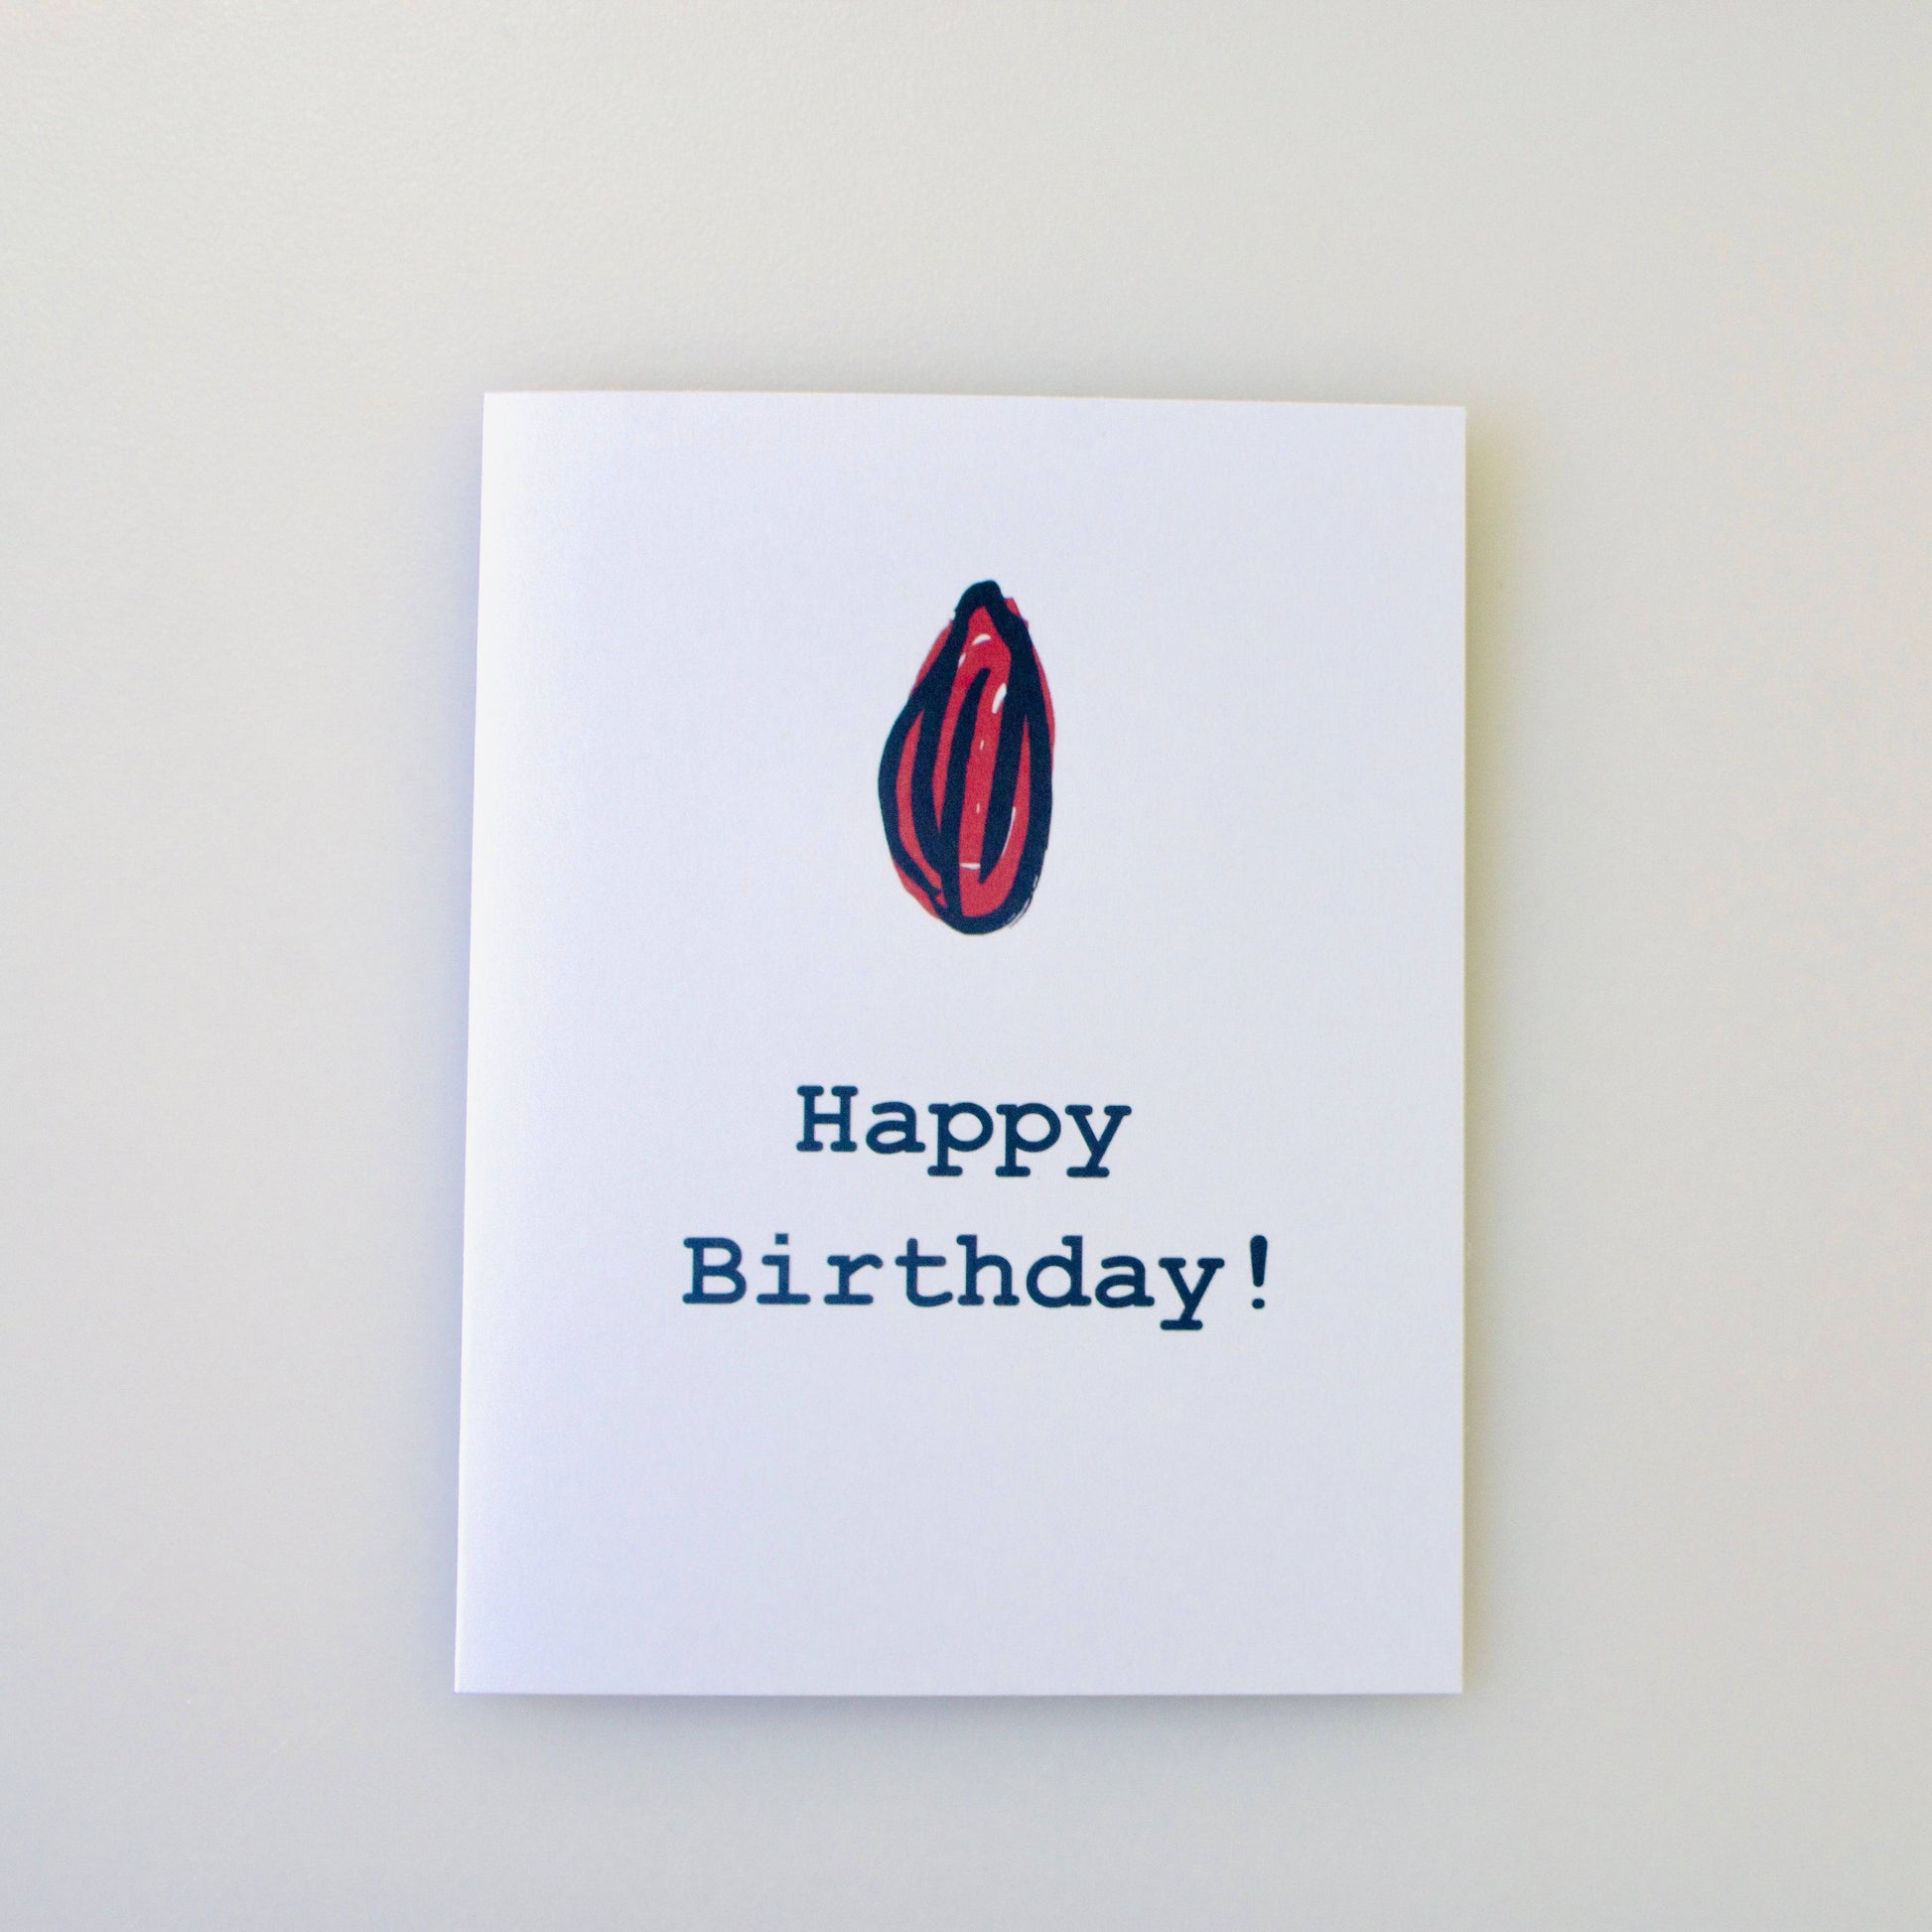 Happy birthday card - Sam Joseph chocolates